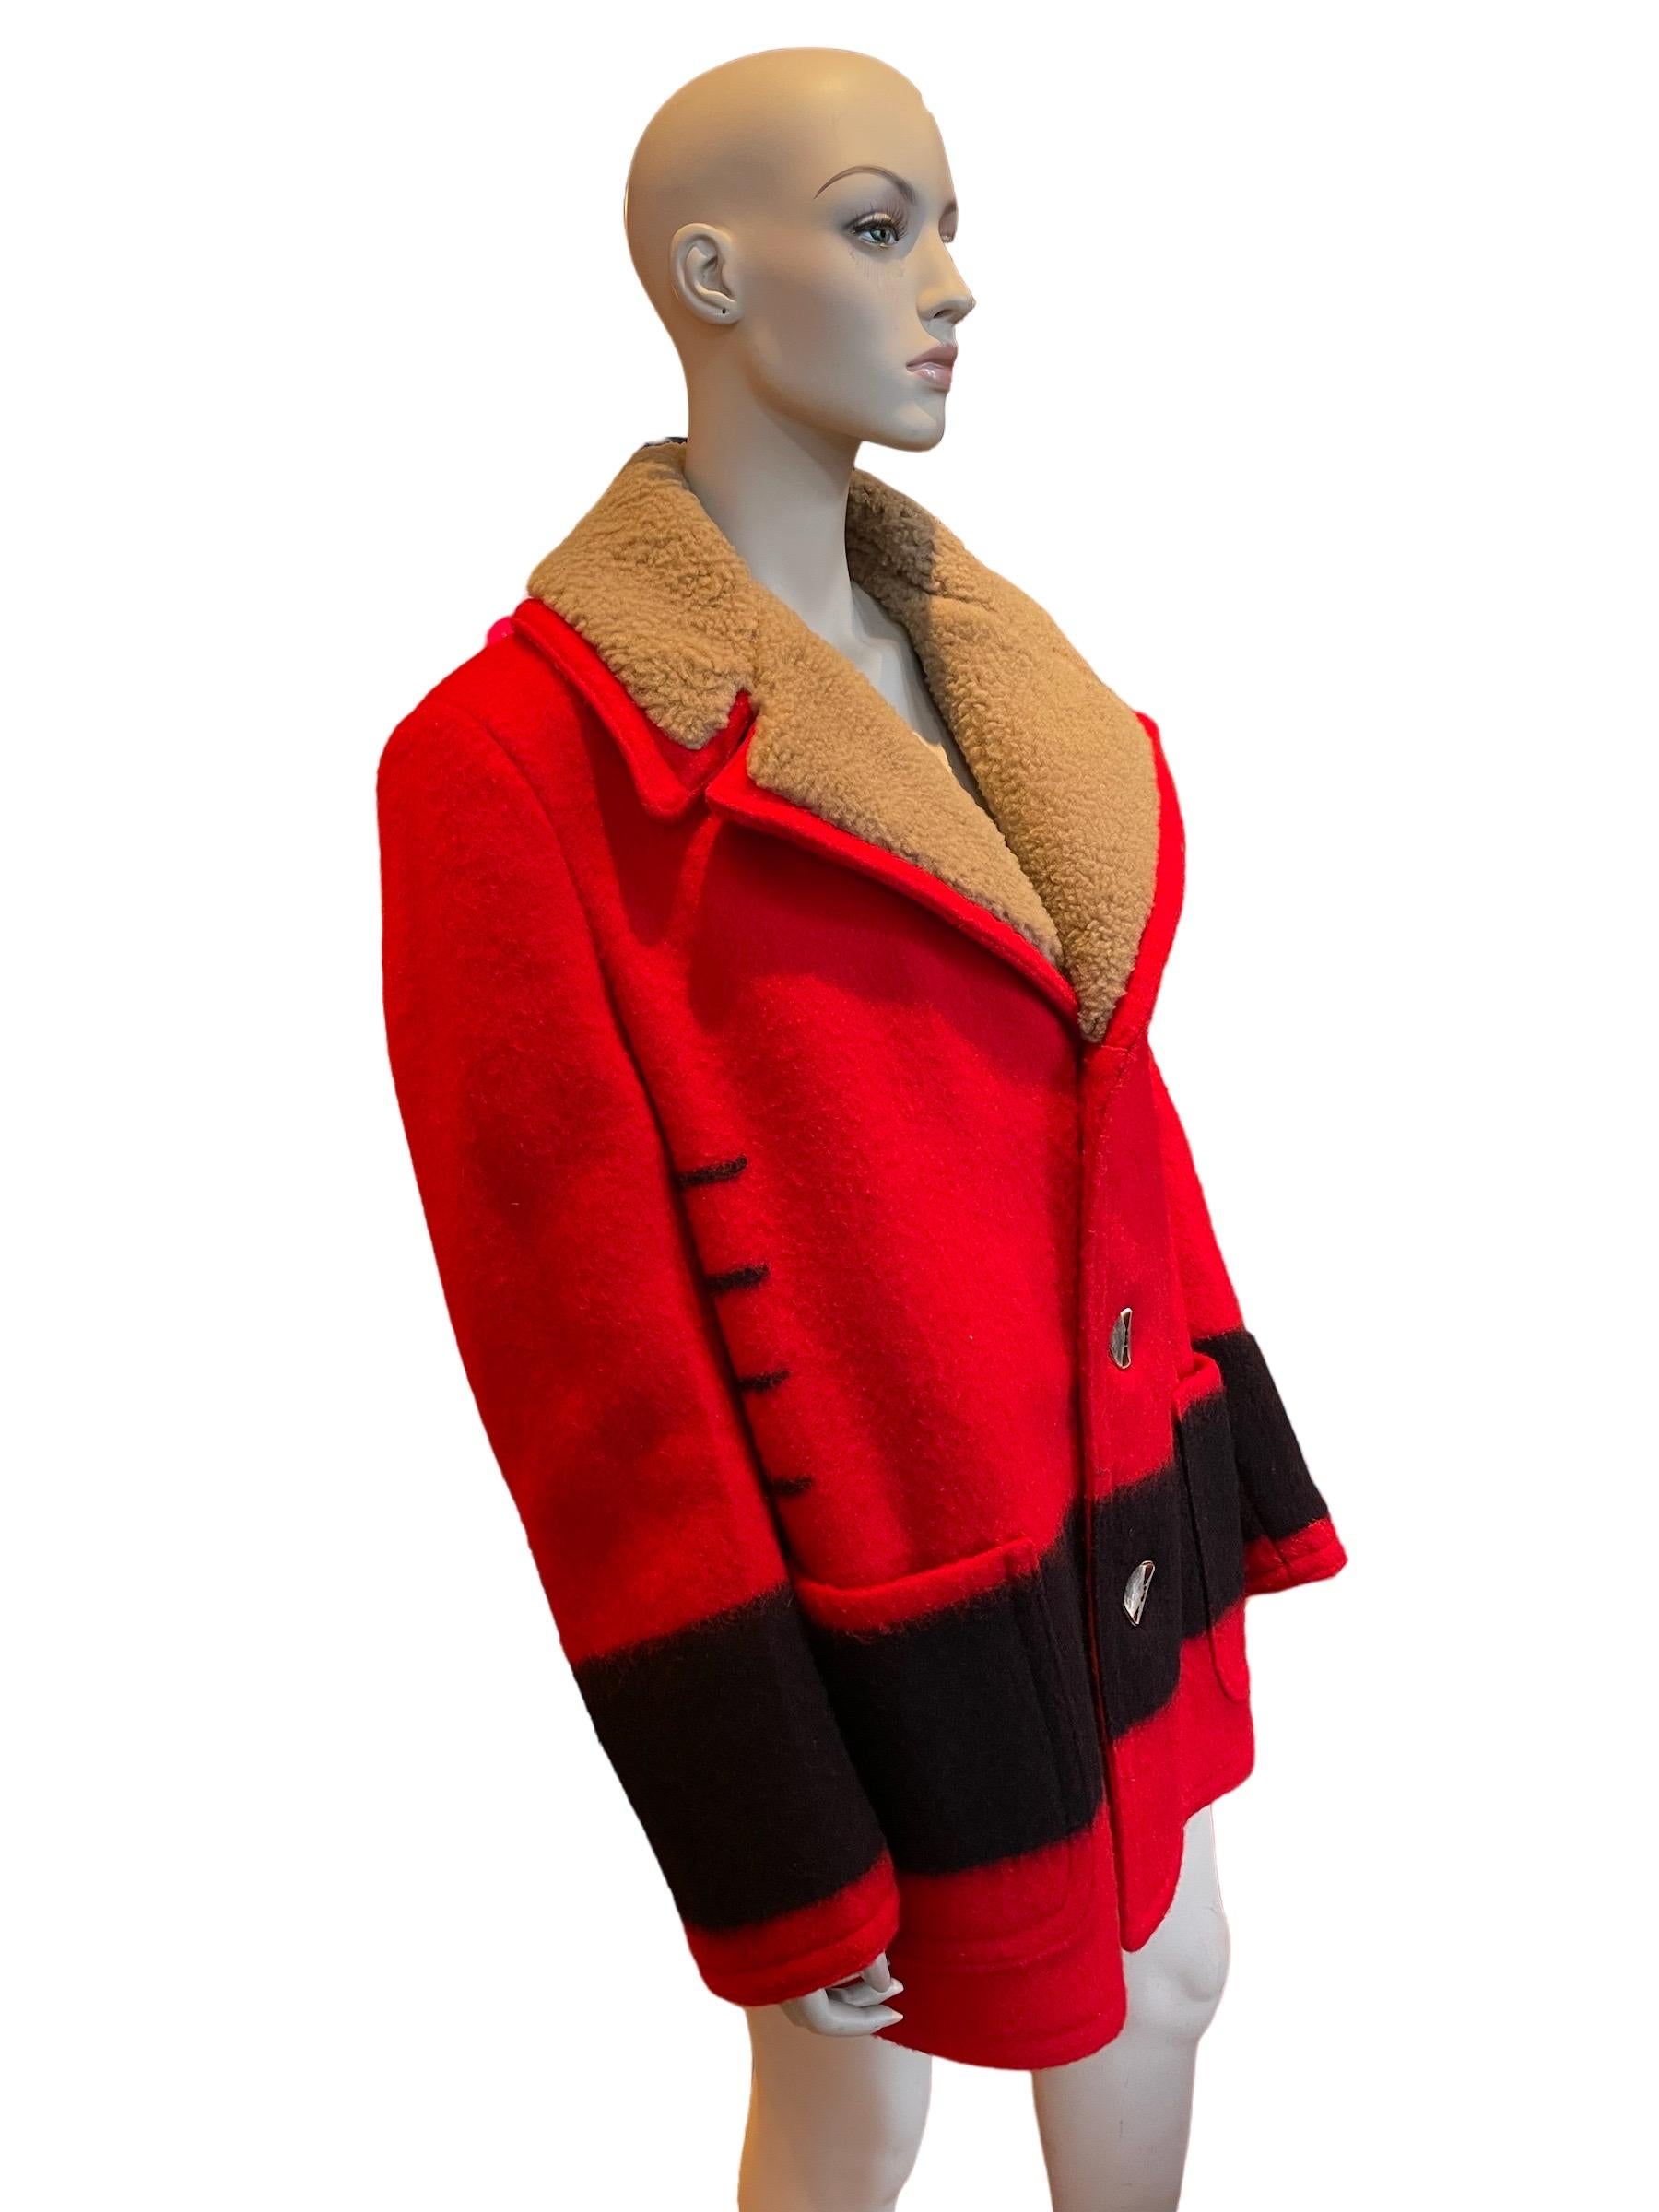 marlboro red jacket